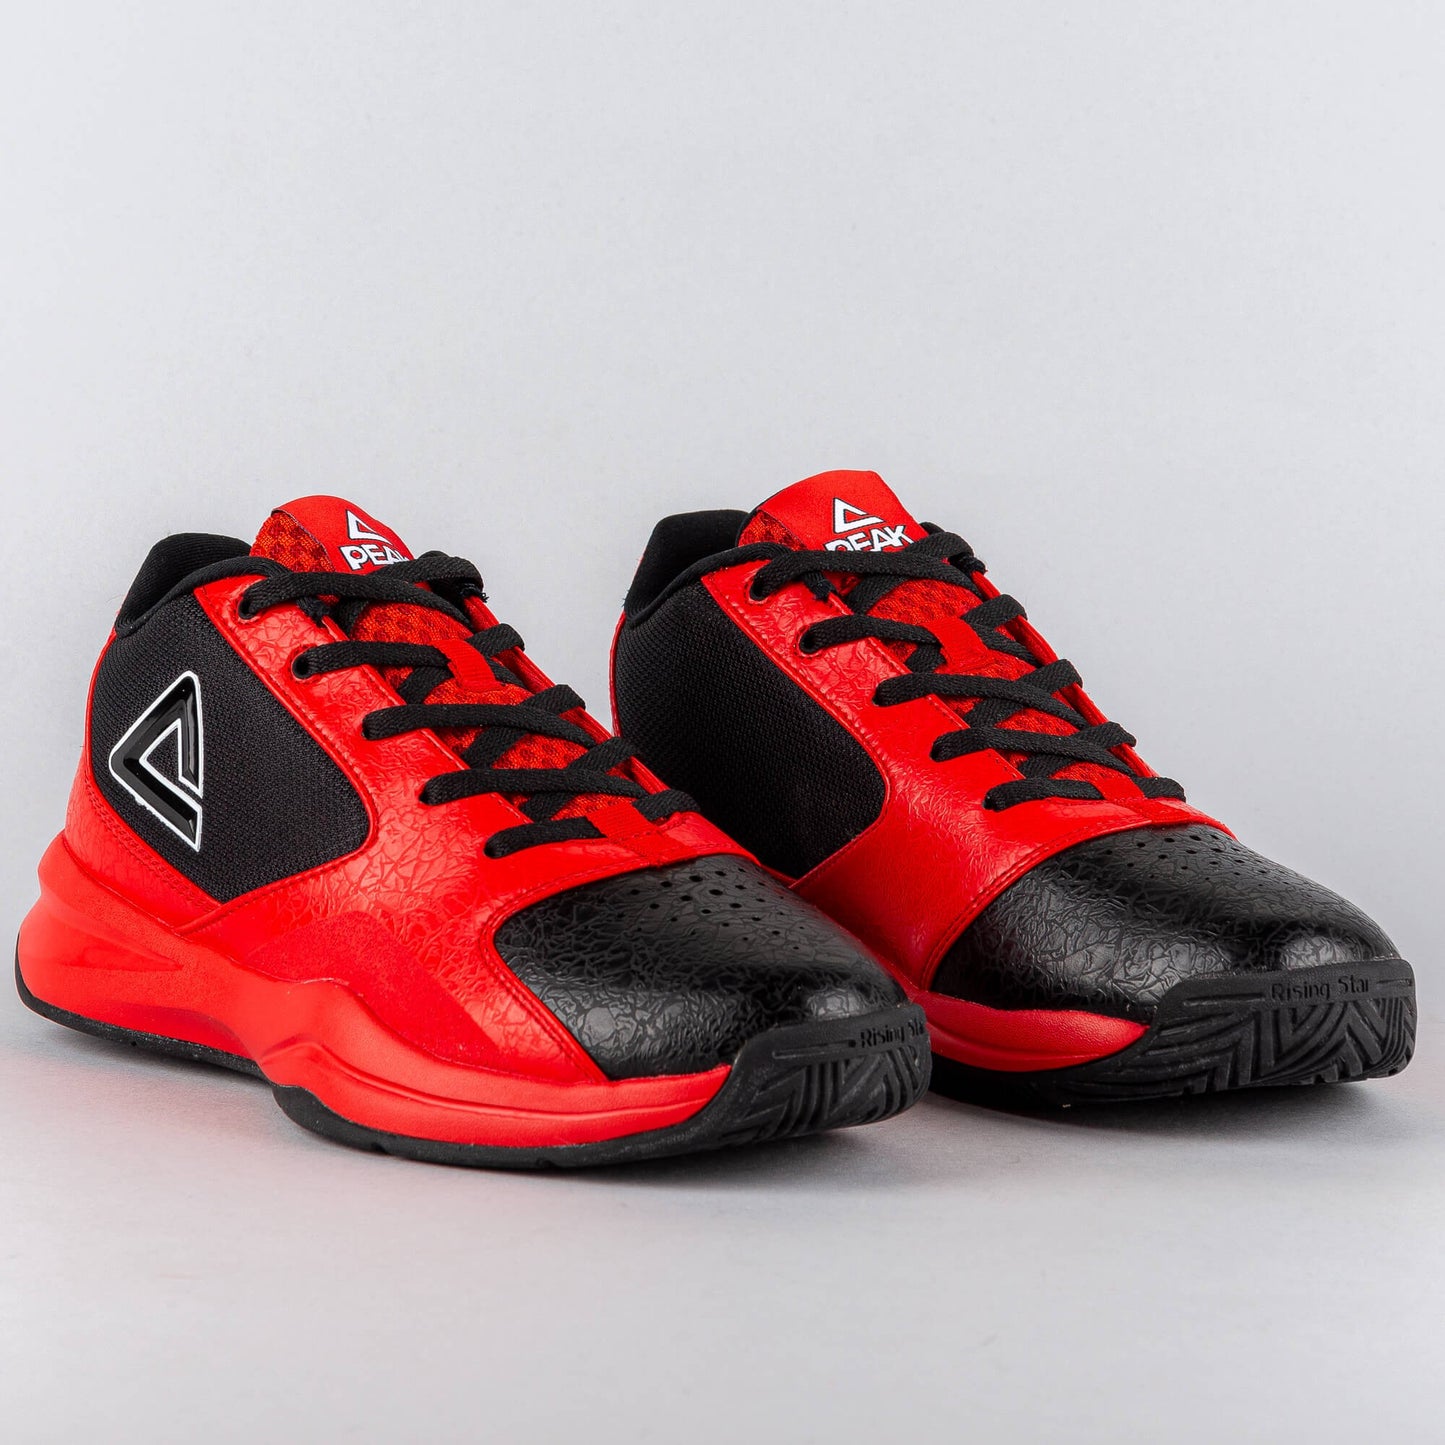 PEAK Basketball Shoes Nova Dk.Red/Black